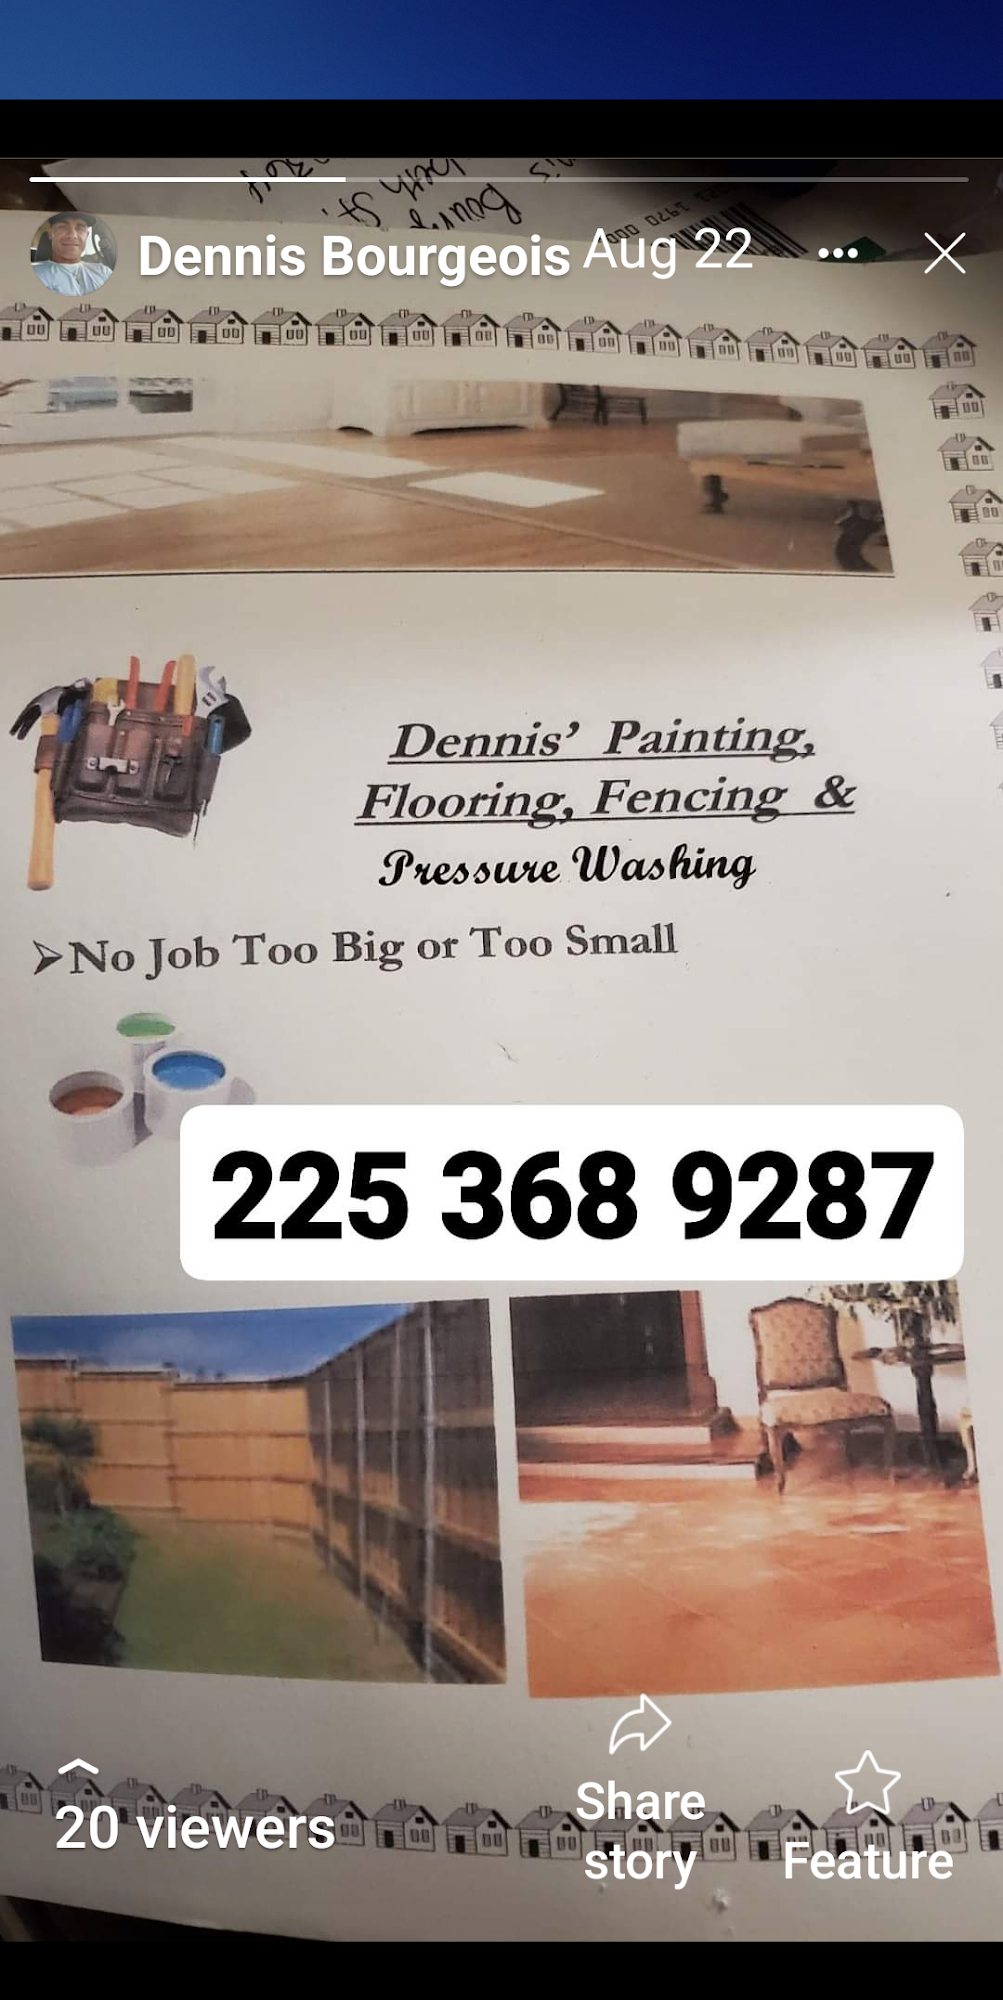 Dennis painting and flooring etc.